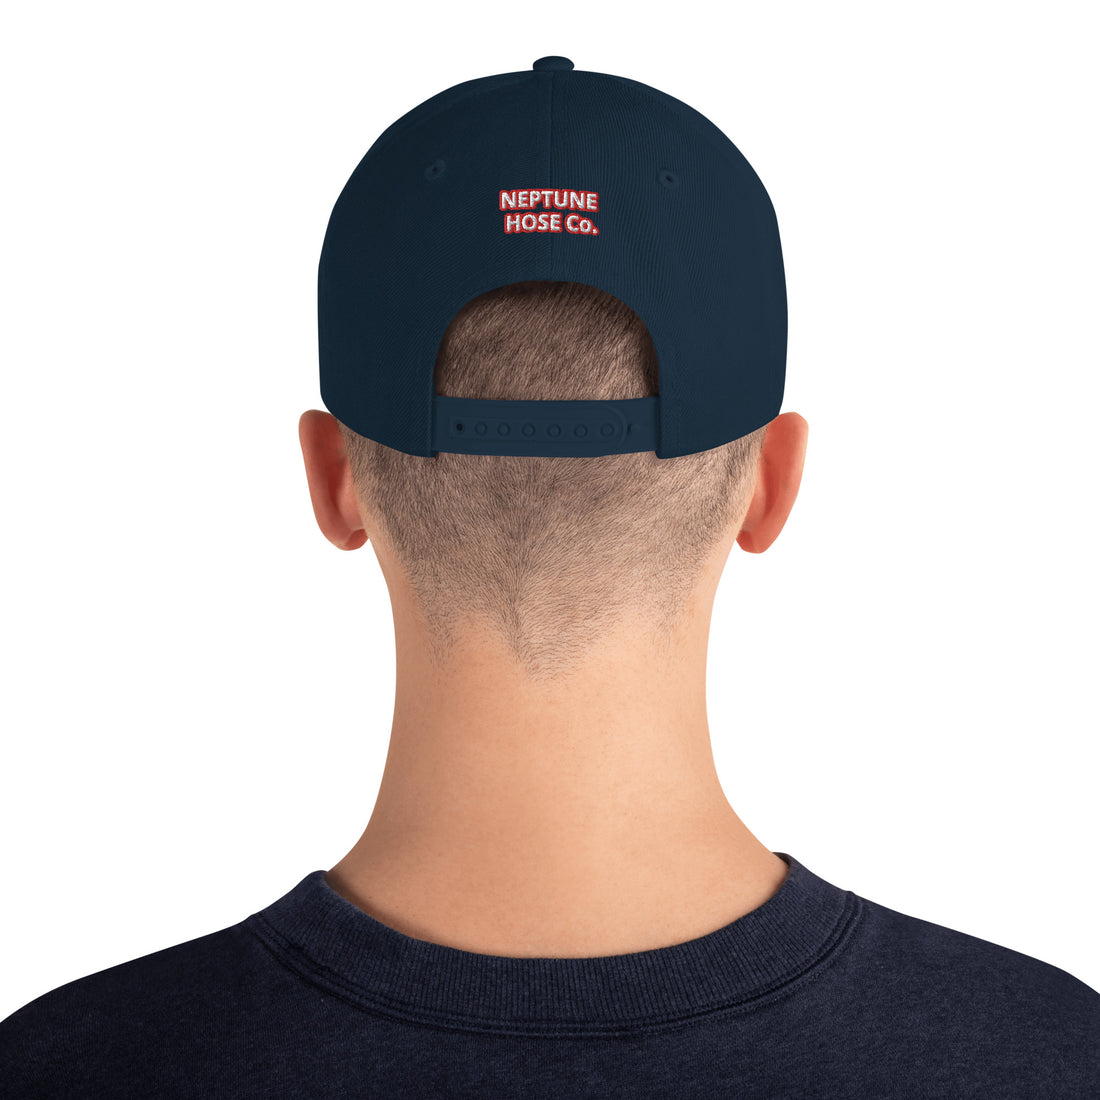 "NEPTUNE HOSE Co." Snapback Hat